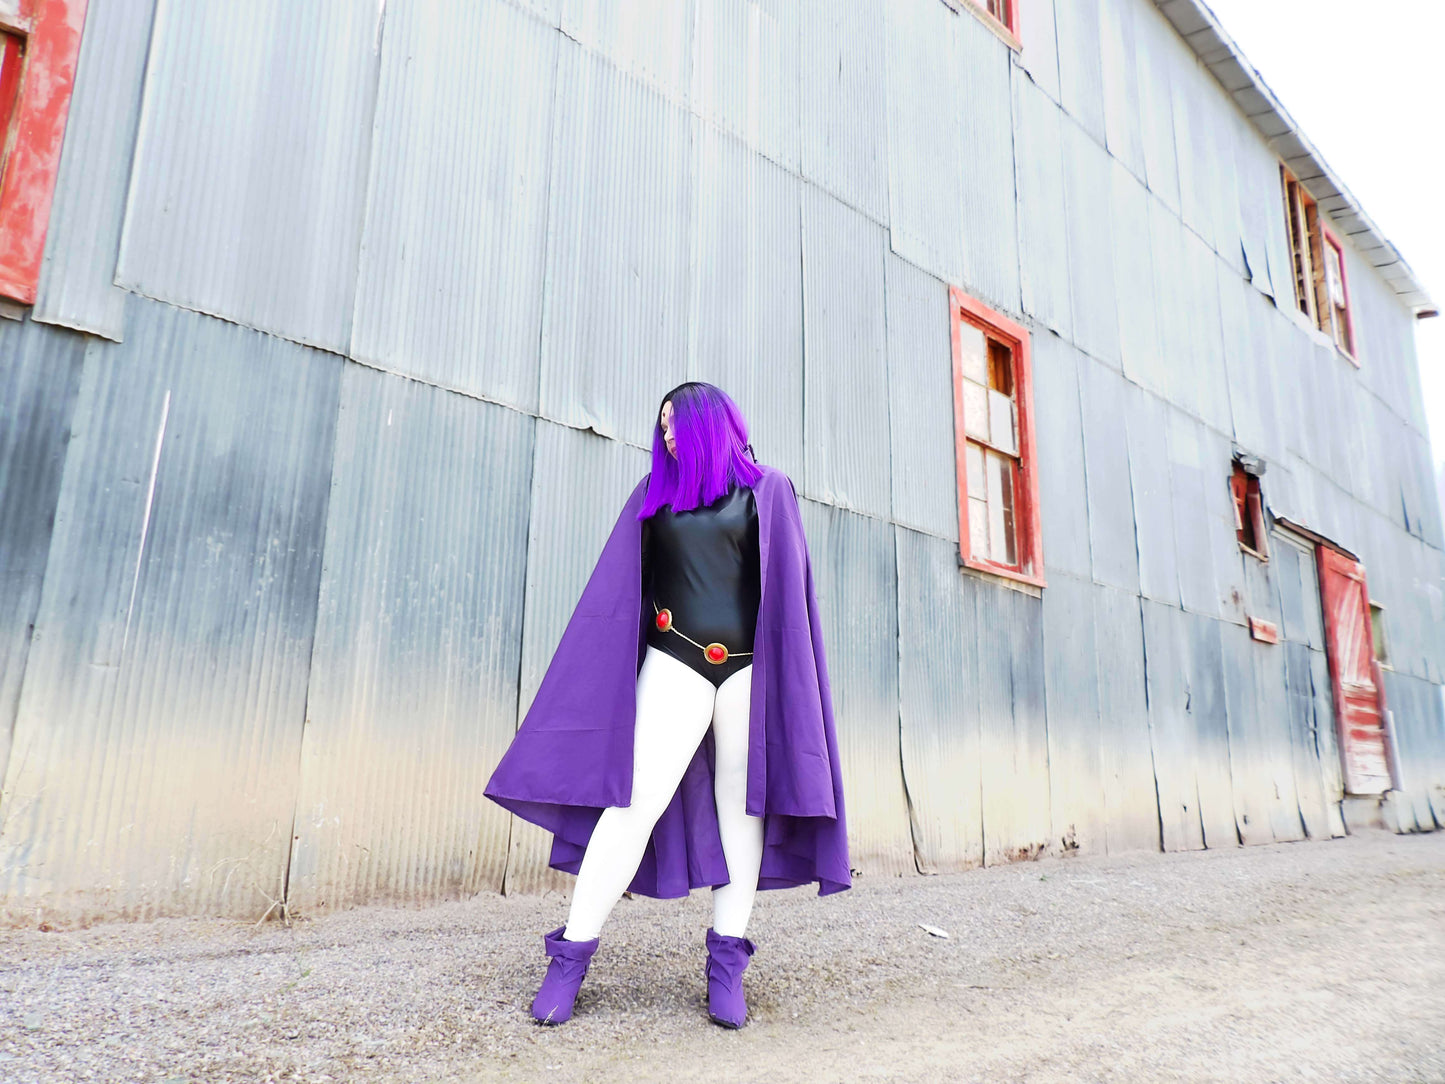 Teen Titans Raven Inspired Sleek Black Bodysuit with Zipper at Back